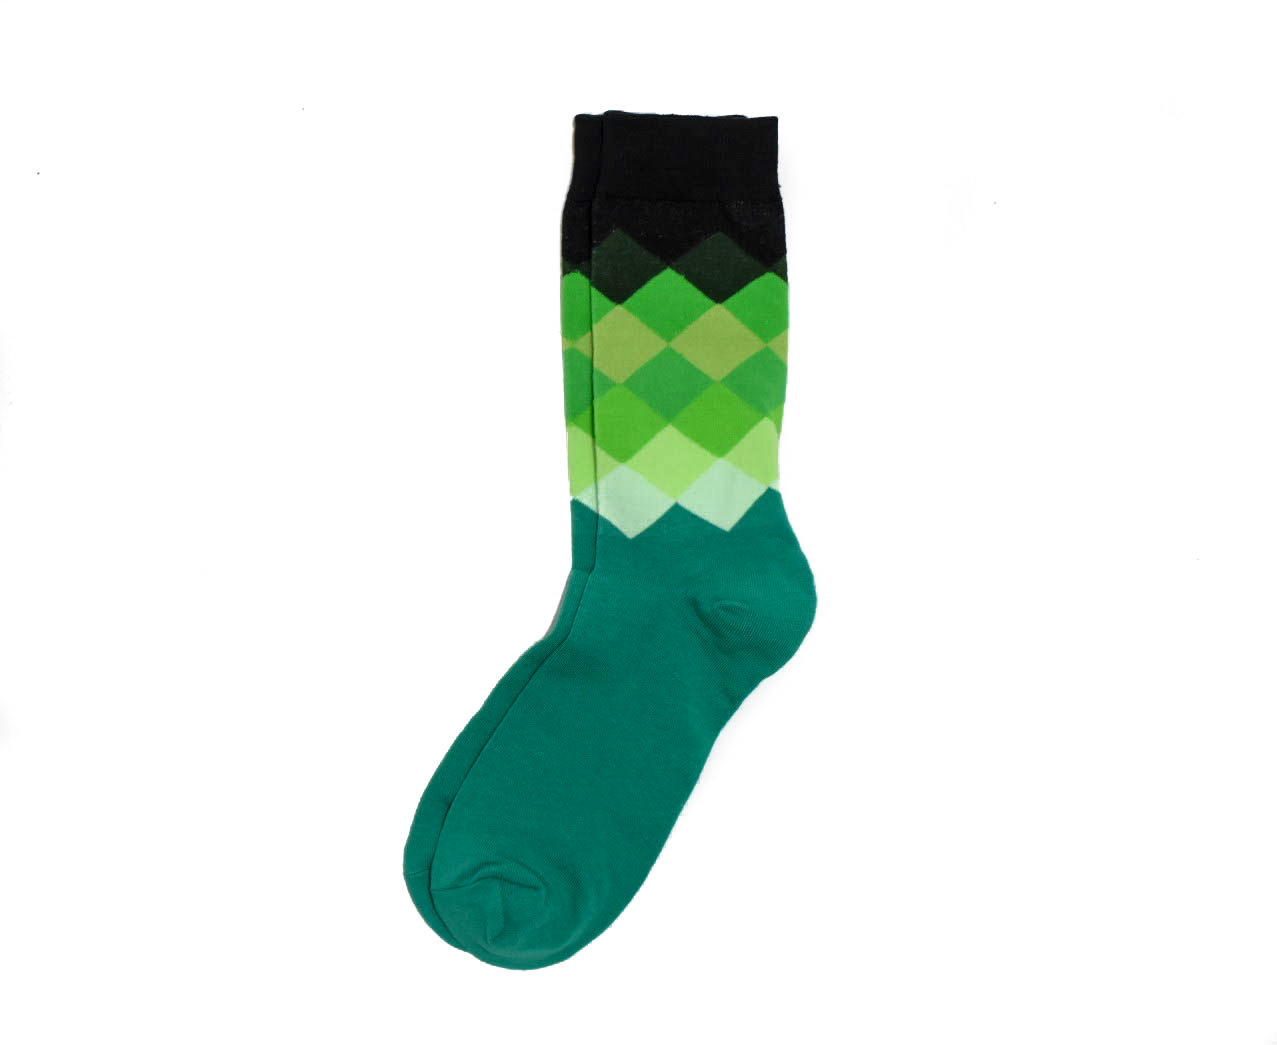  Colorful Green Mile socks 